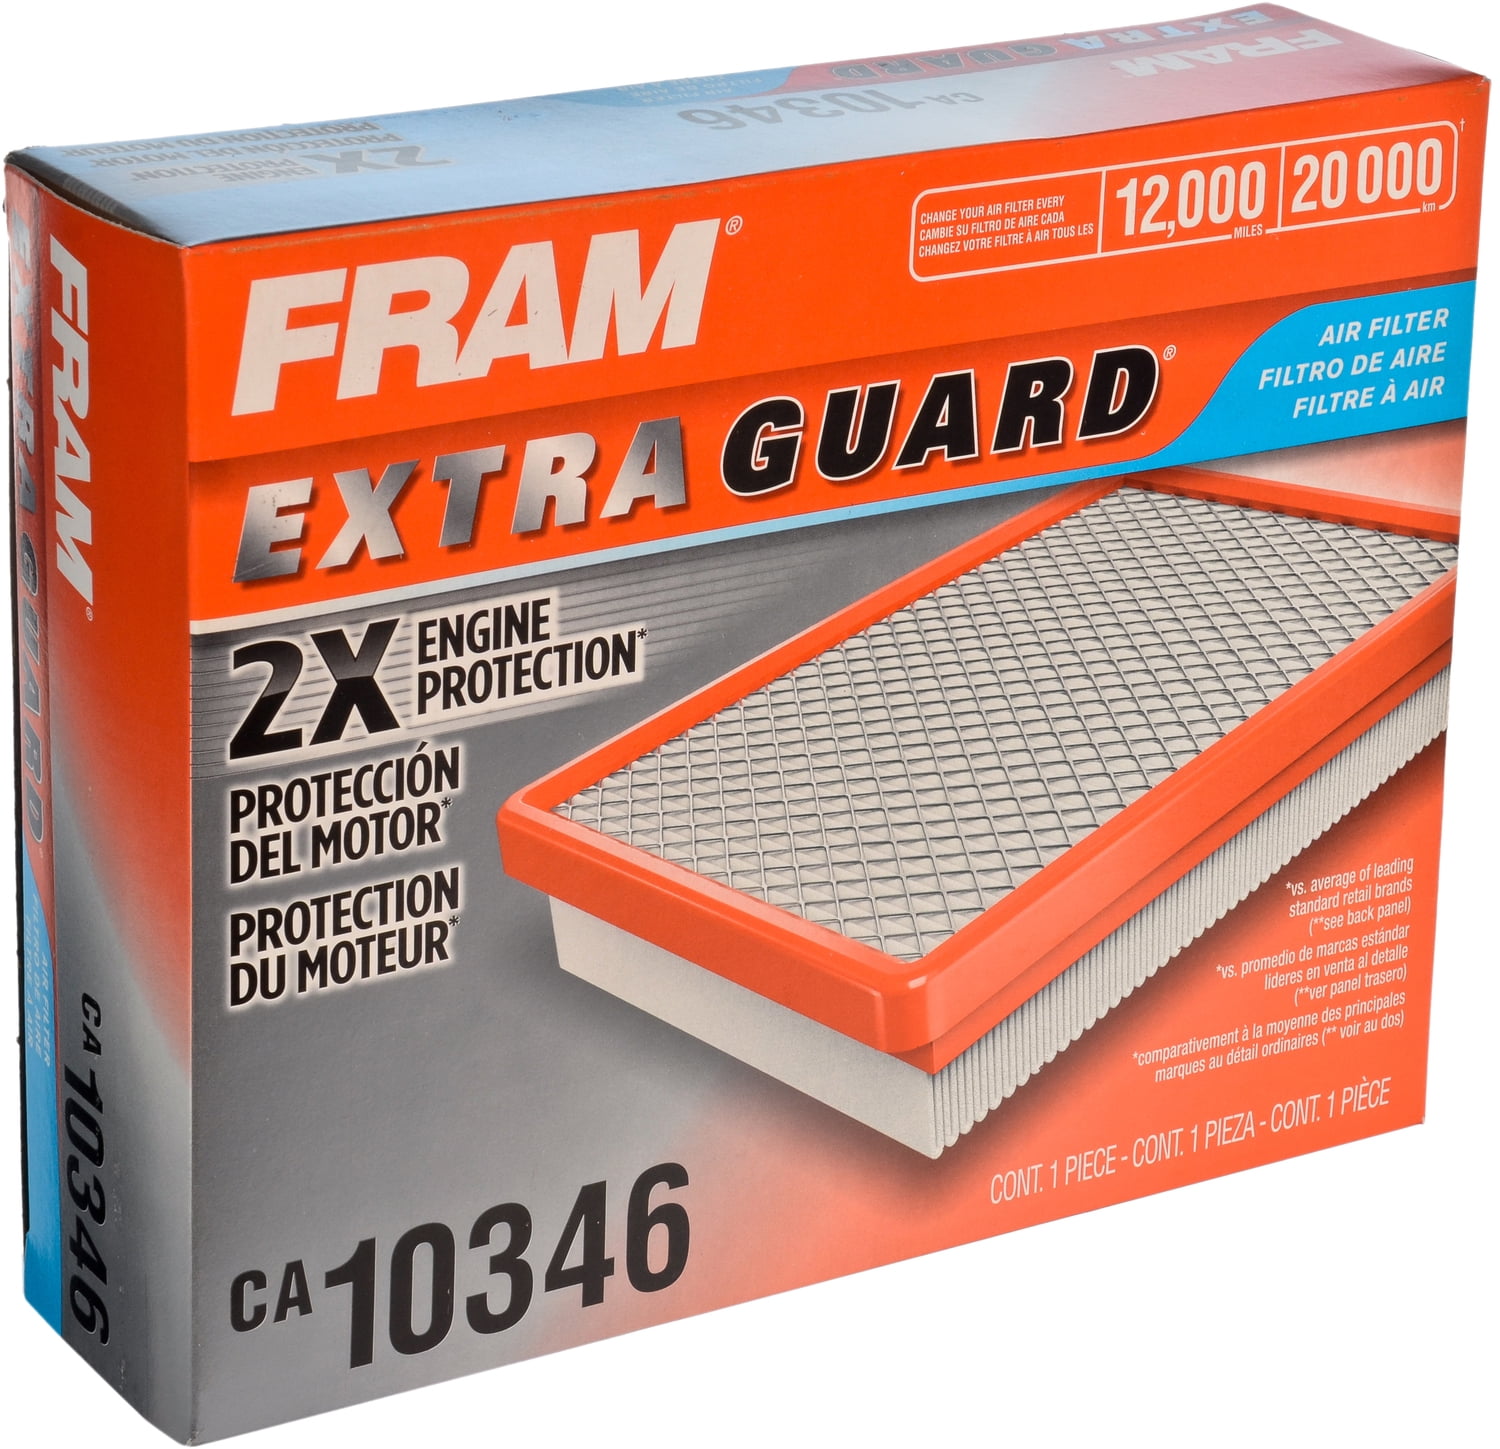 FRAM CA10786 Extra Guard Flexible Air Filter 